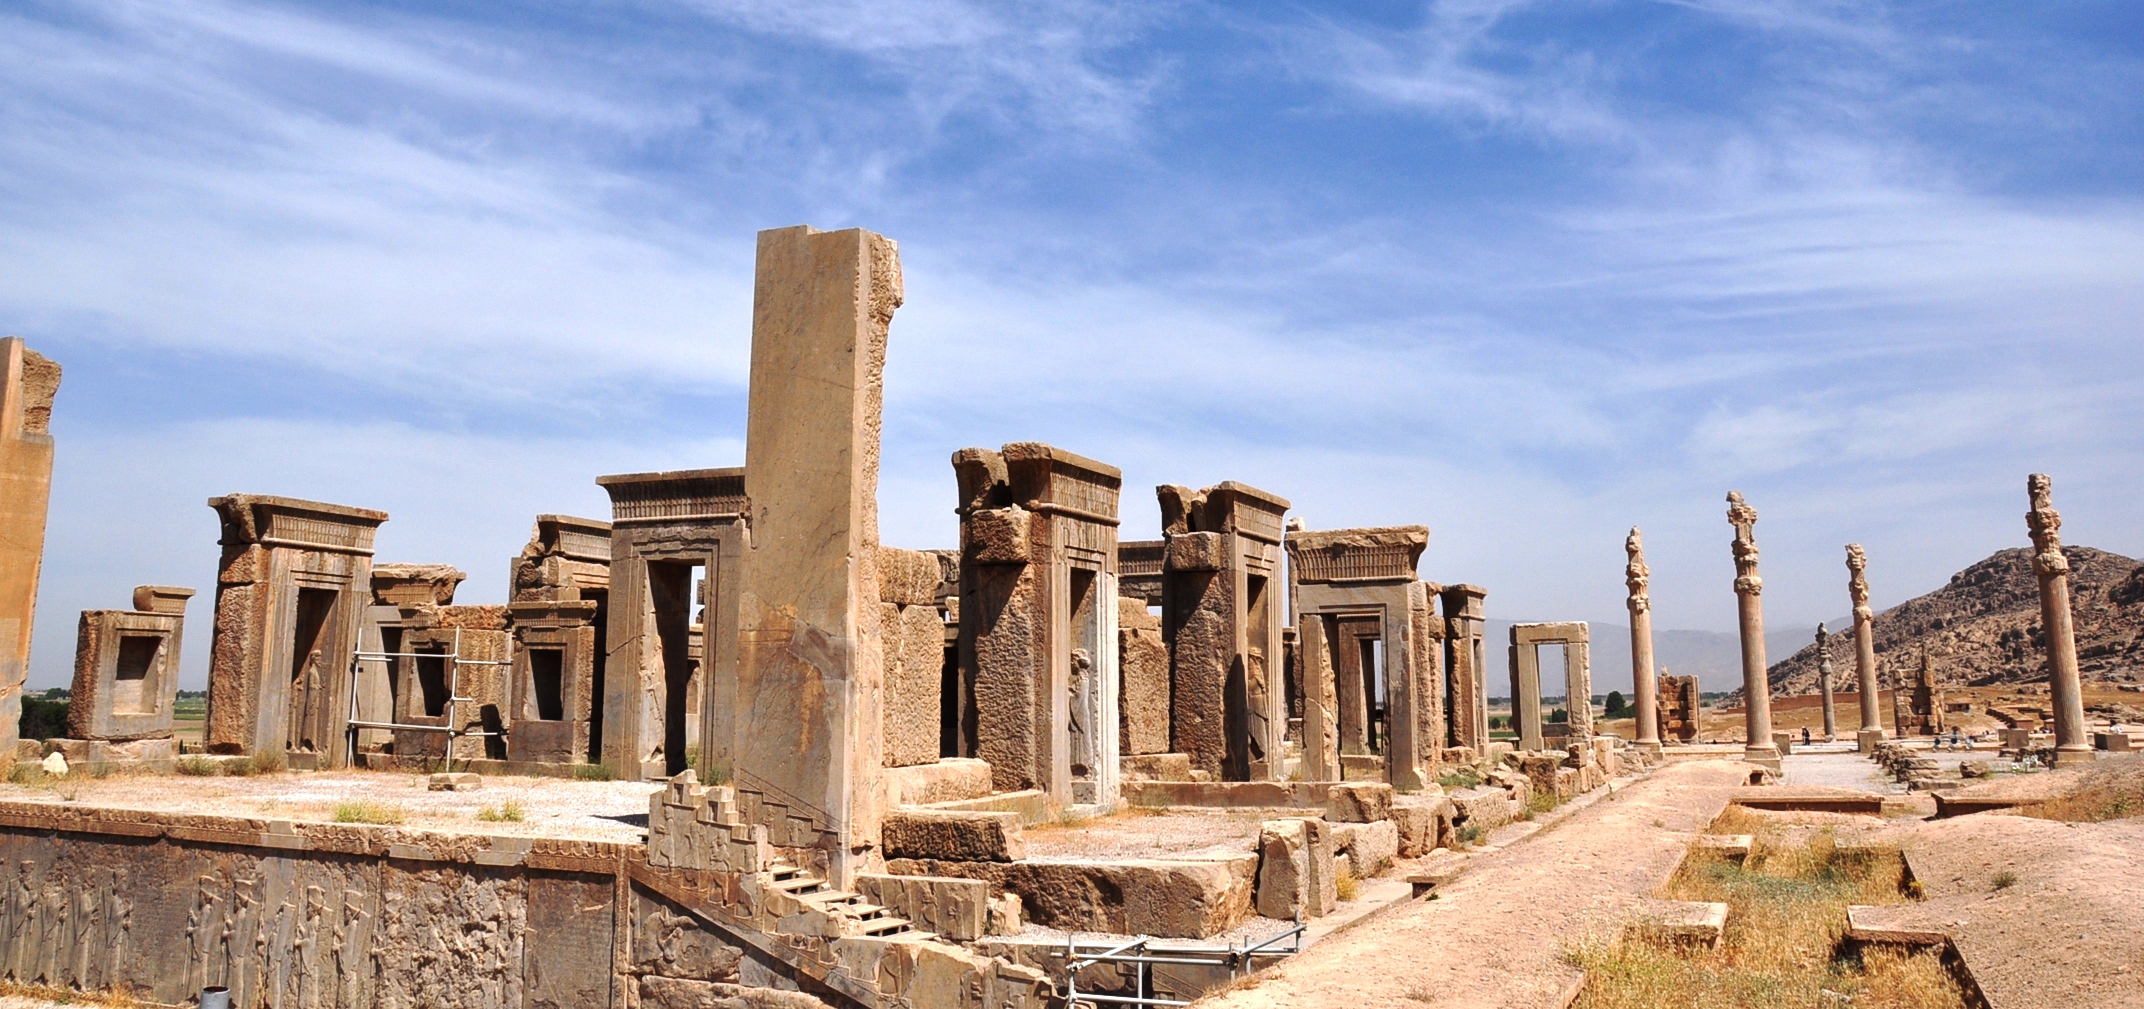 Persepolis: The Ancient Capital of Persian Achaemenid Empire